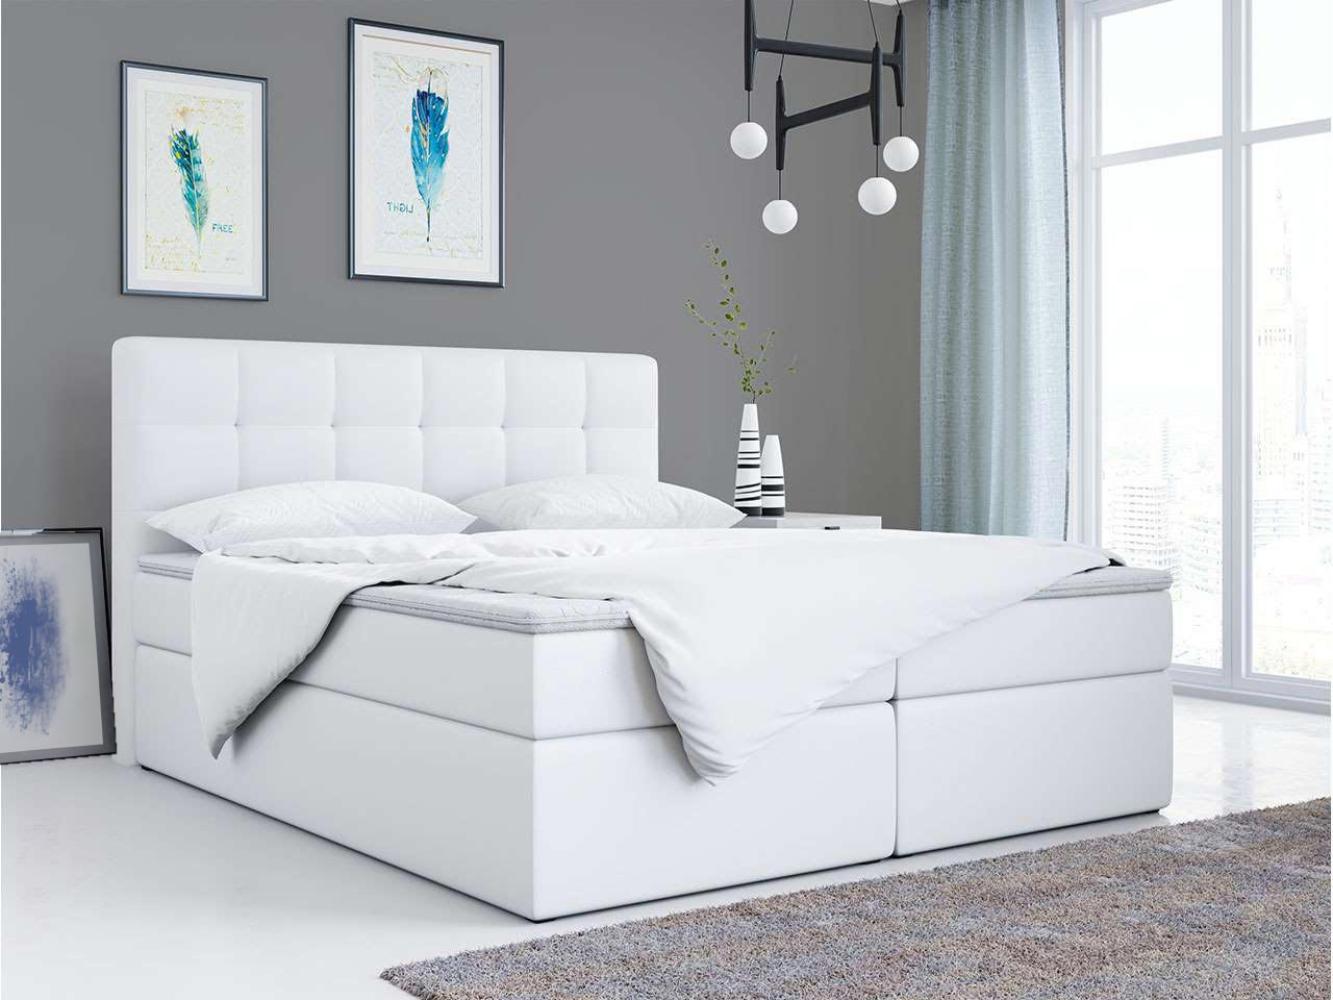 Doppelbett Polsterbett Kunstlederbett mit Bettkasten - TOP-2 - 120x200cm - Weiß Kunstleder - H3 Bild 1